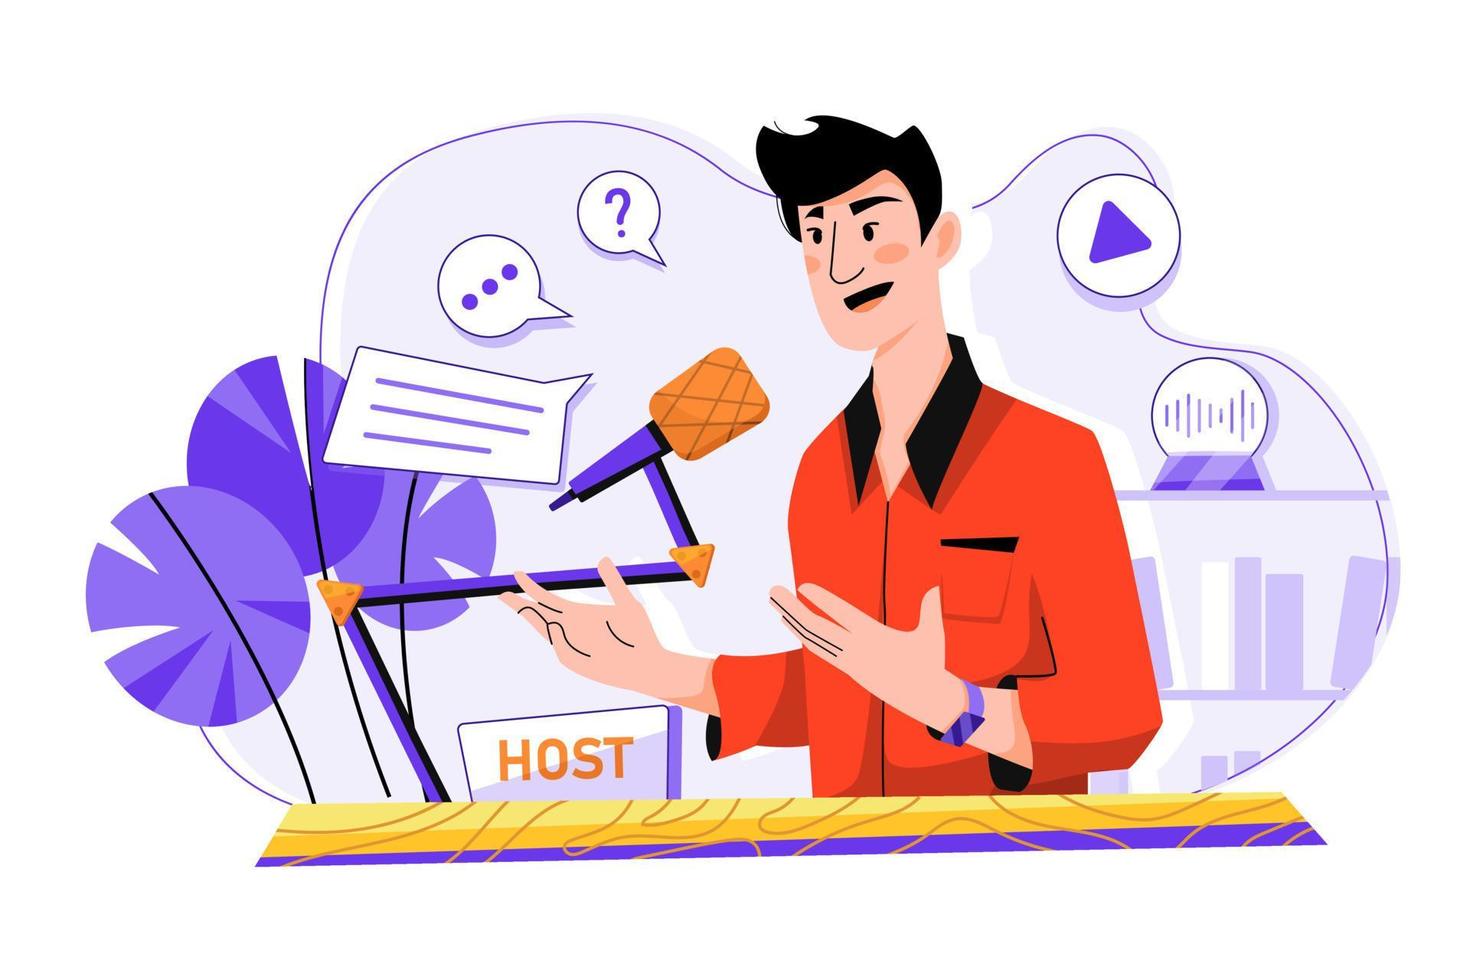 Man Hosting Podcast Illustration concept on white background vector